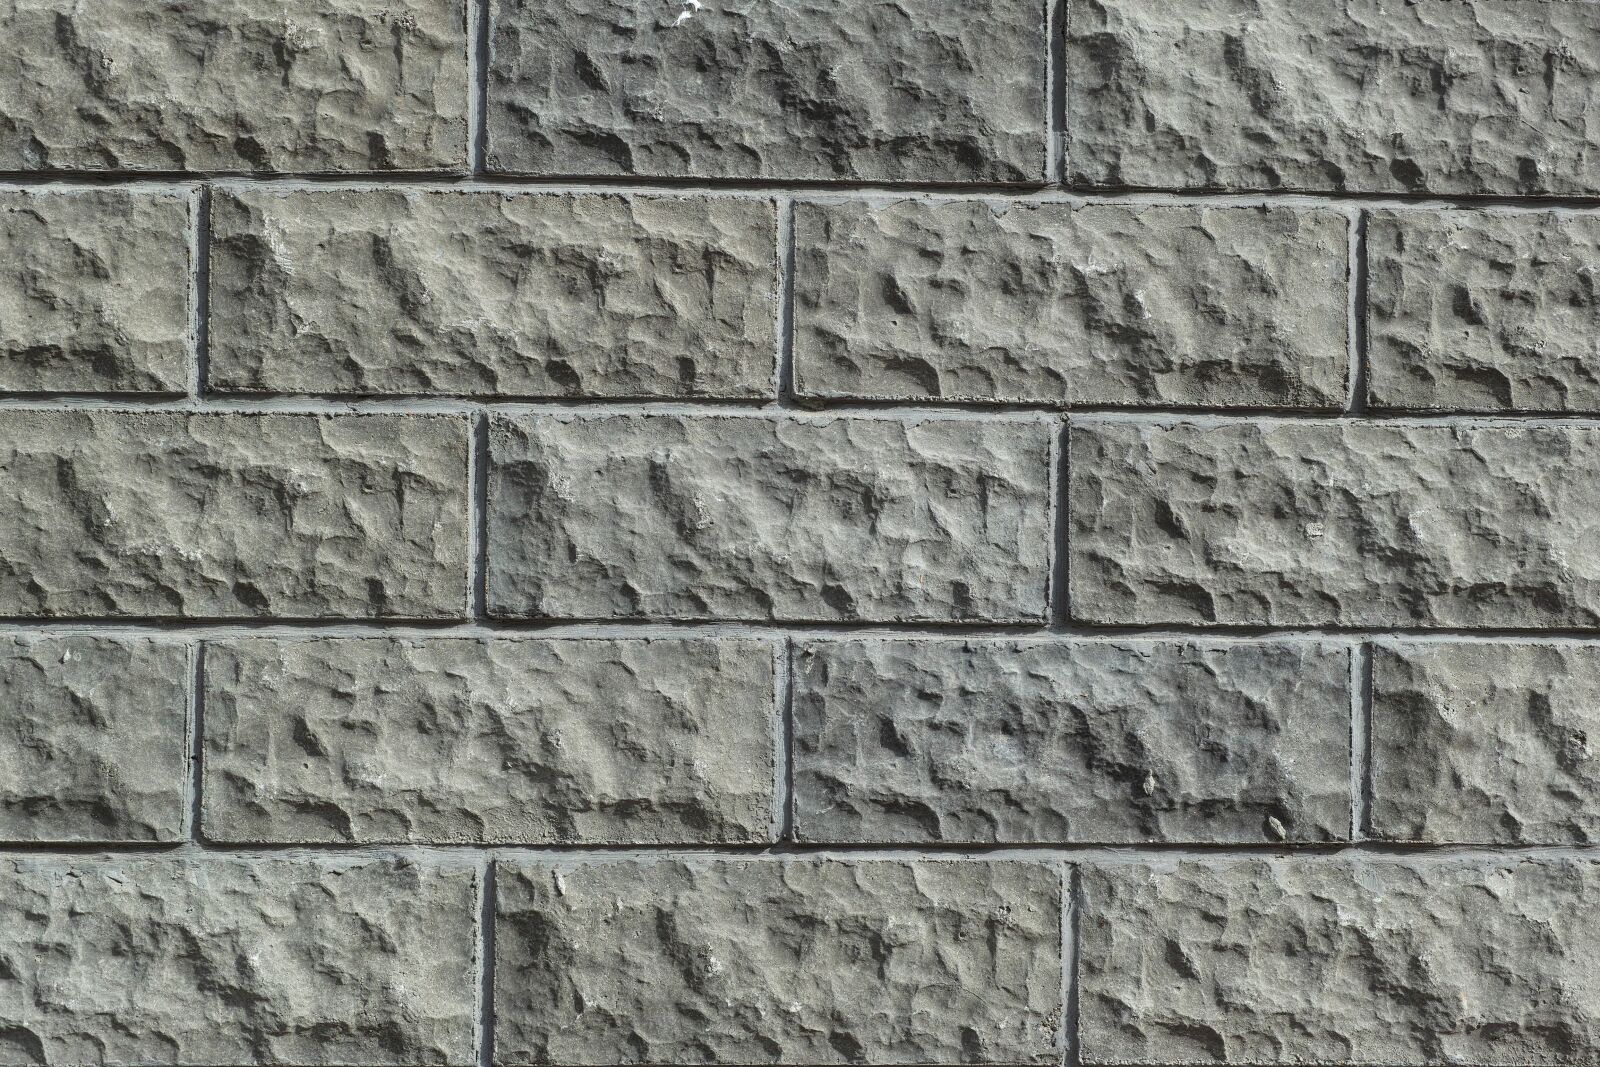 Sigma DP3 Merrill sample photo. Wall, stone, granite photography